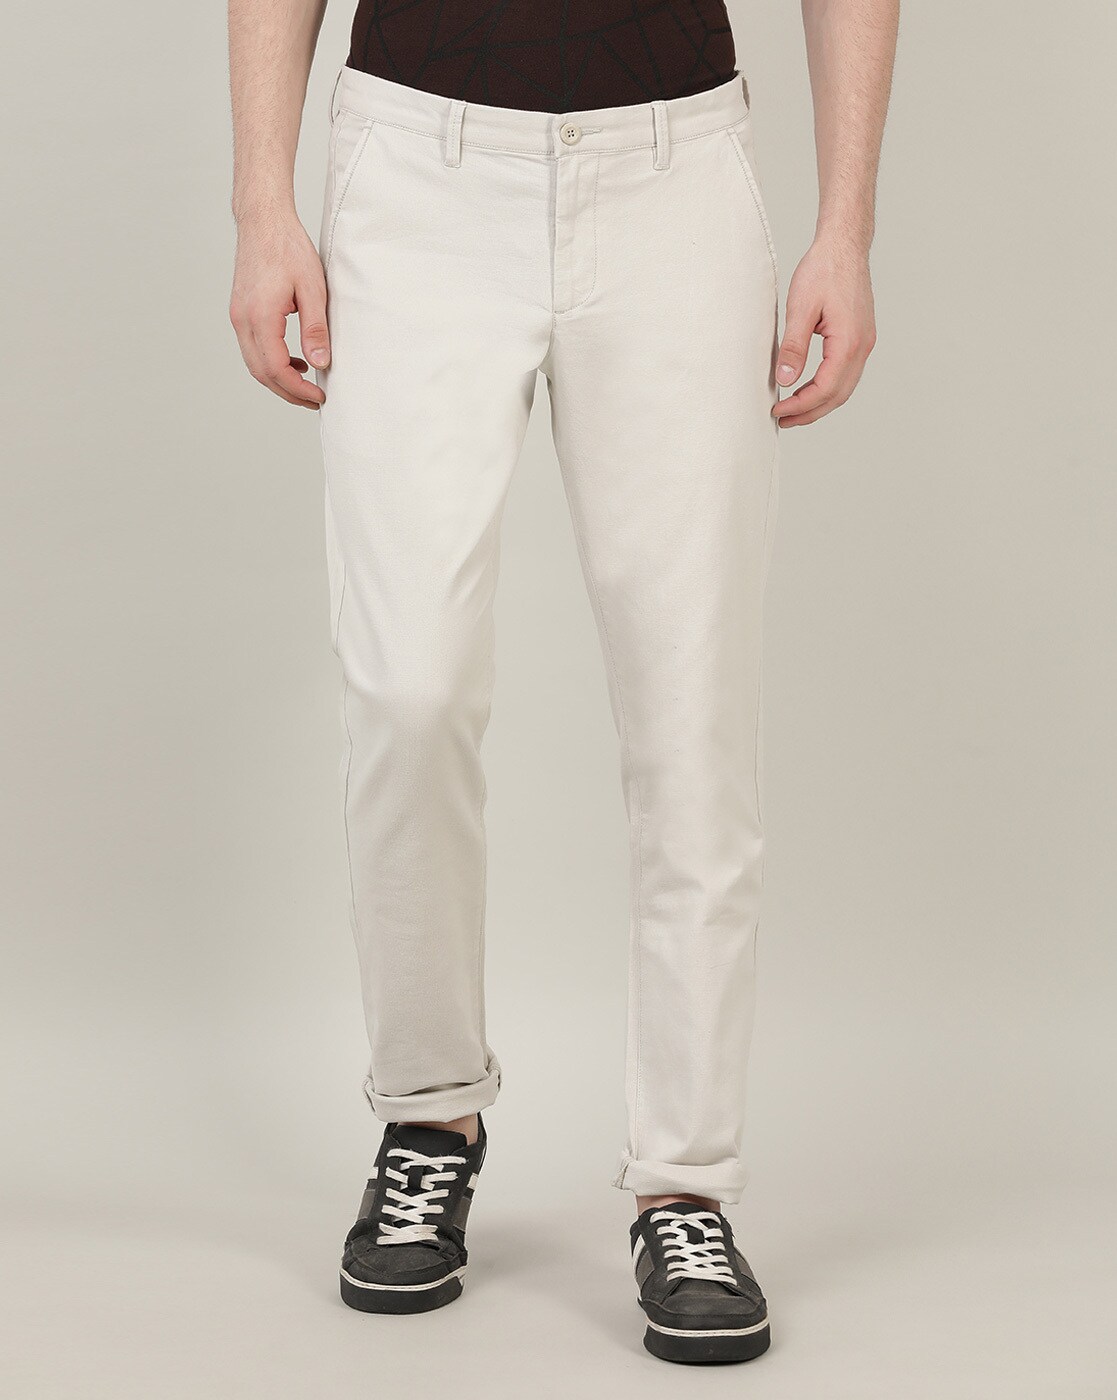 Buy Cream Trousers  Pants for Men by CROCODILE Online  Ajiocom